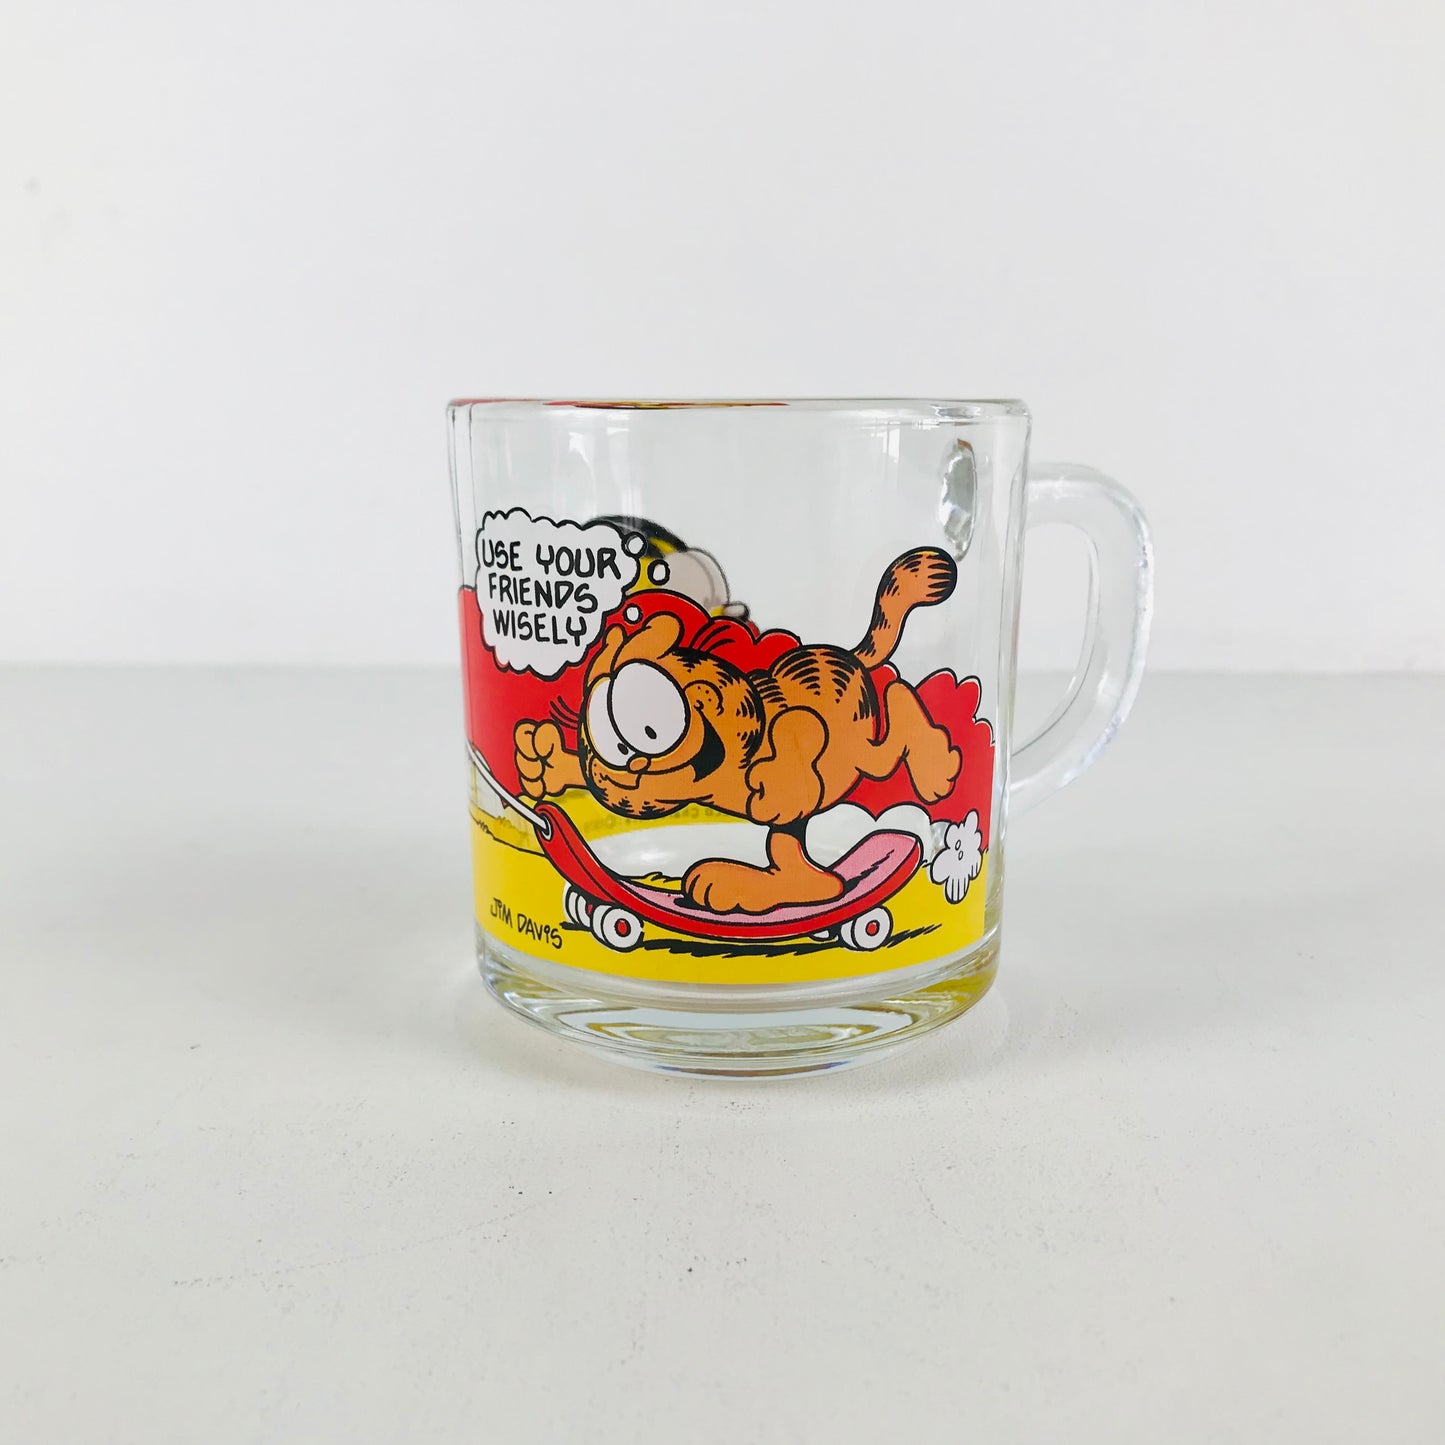 1980s McDonalds Garfield Glass Mug with Odie, Classic Jim Davis Cartoon Cat